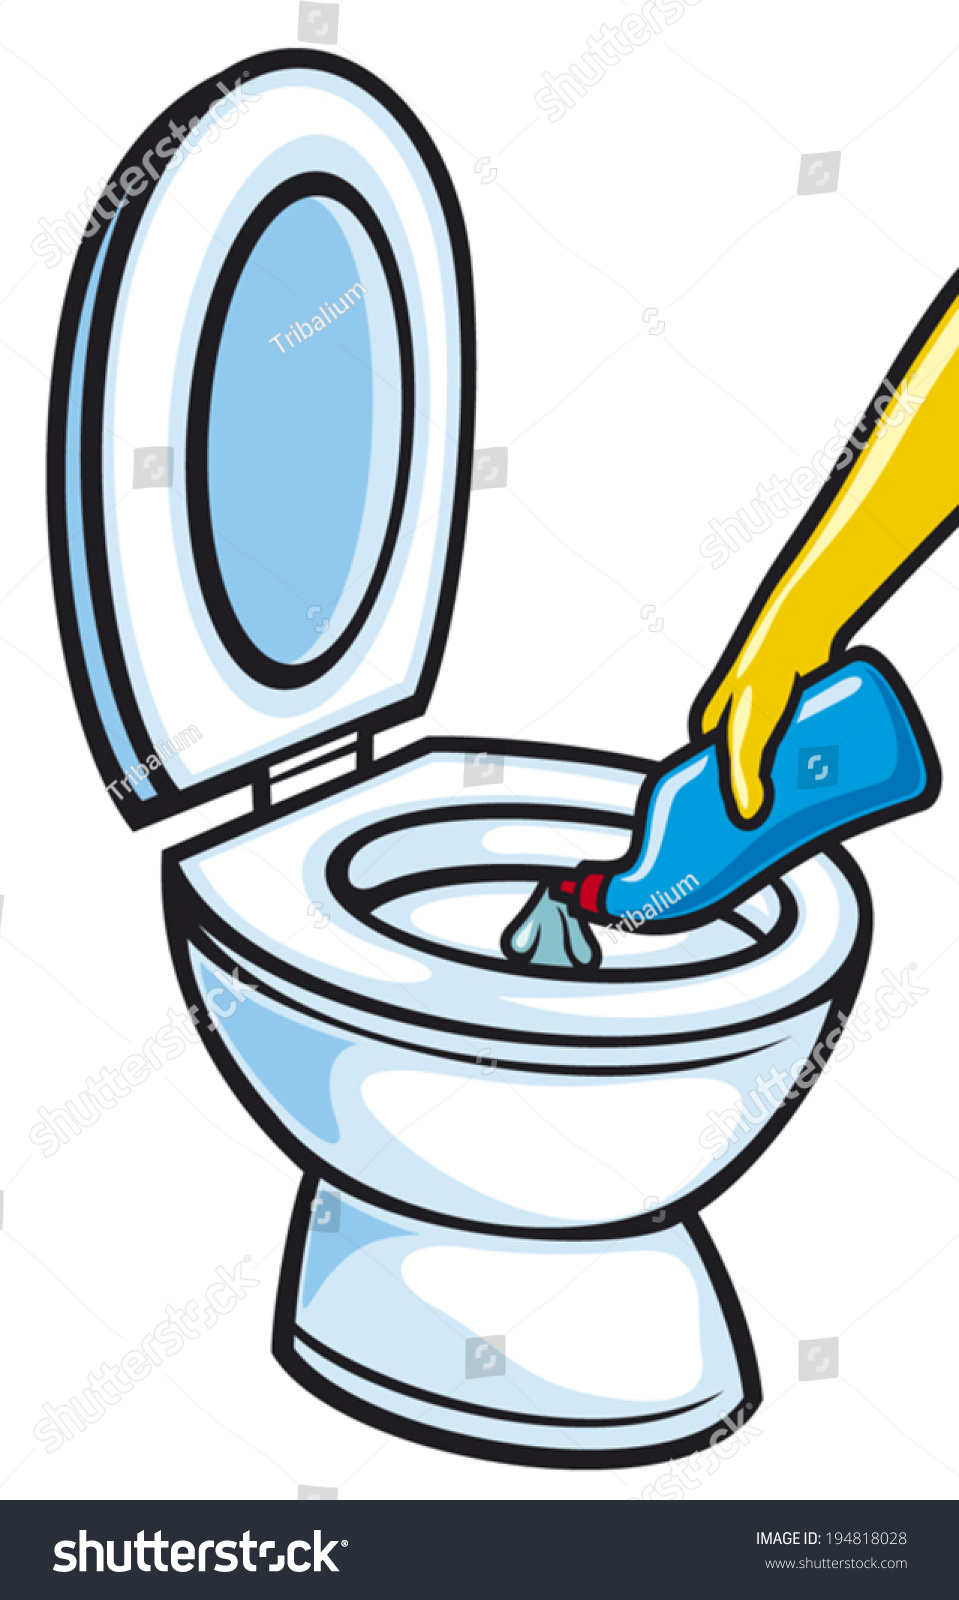 toilet cleaner clip art - photo #23